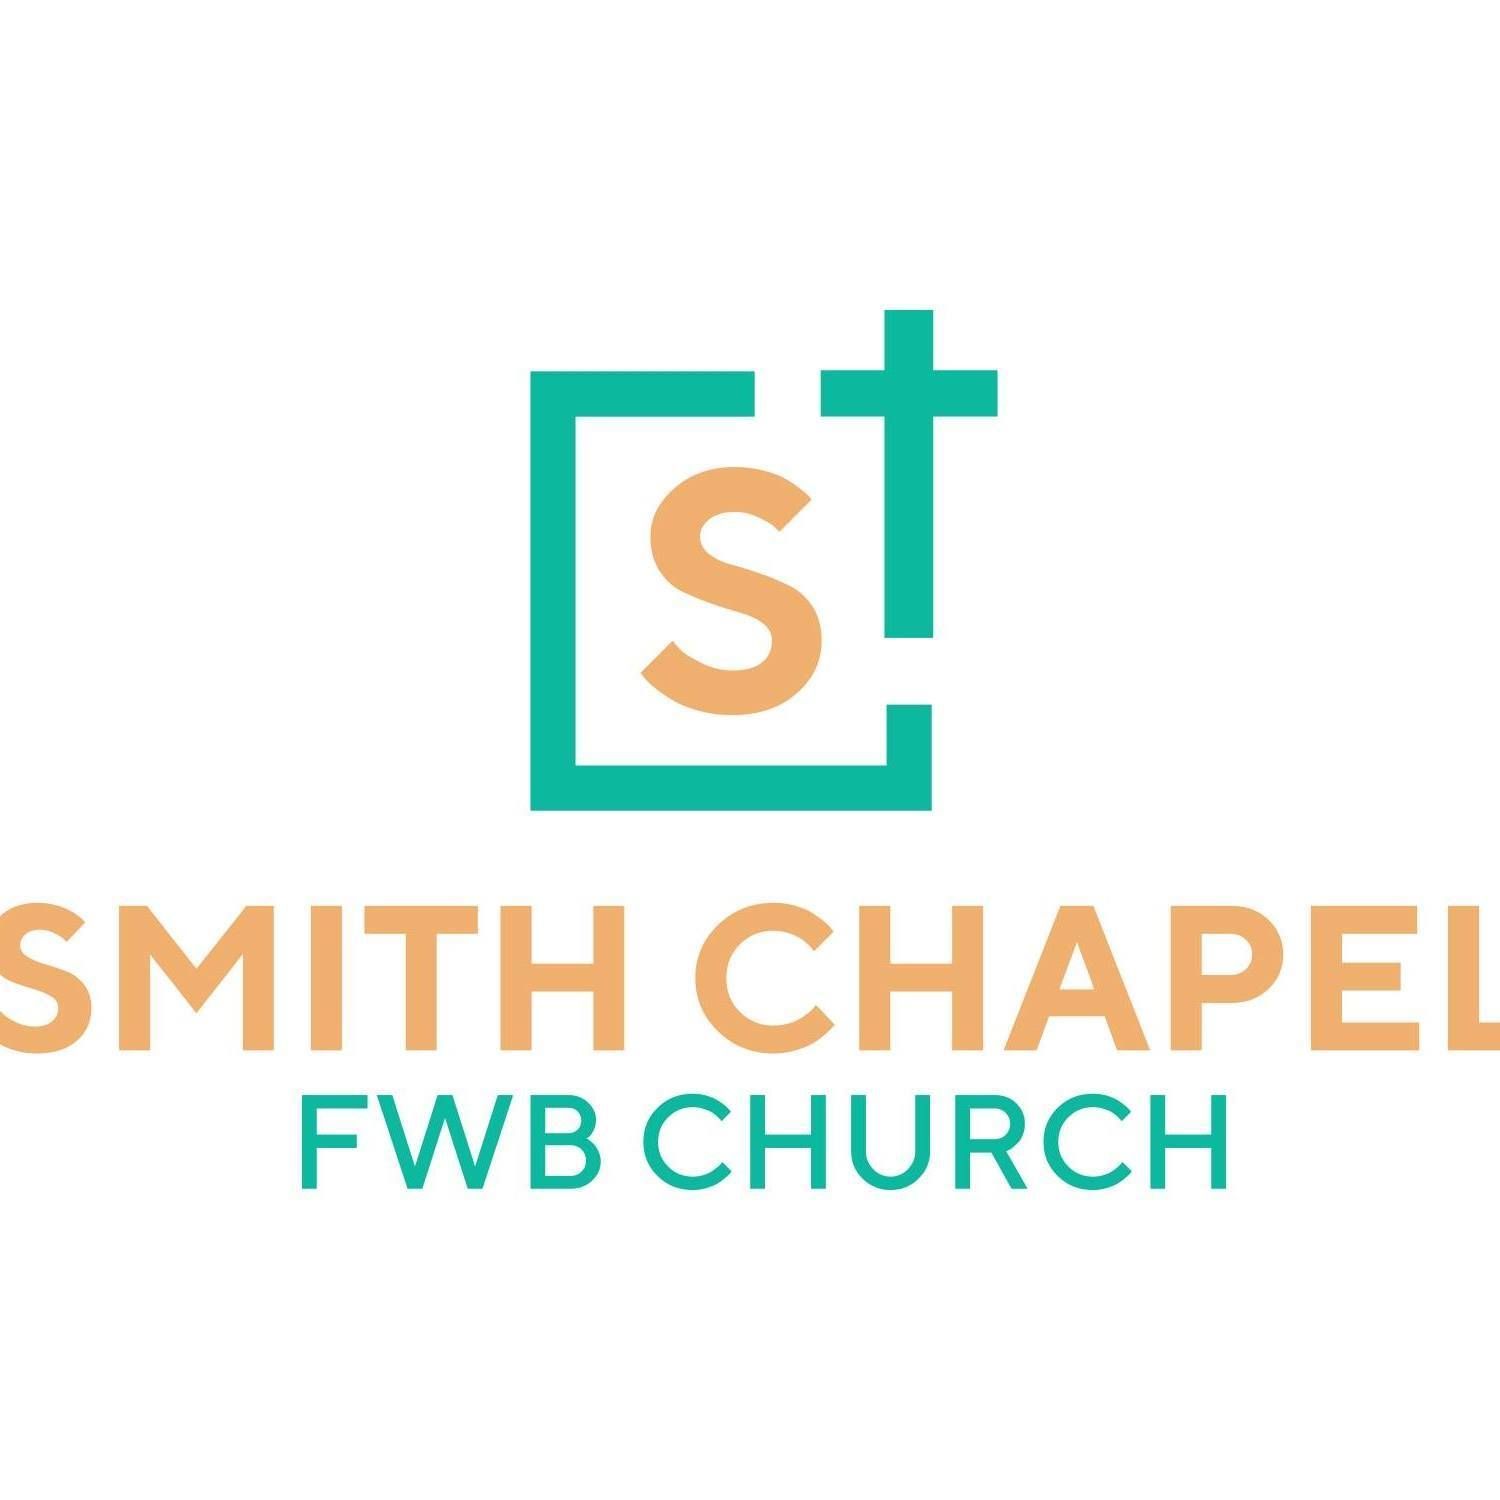 Smith Chapel